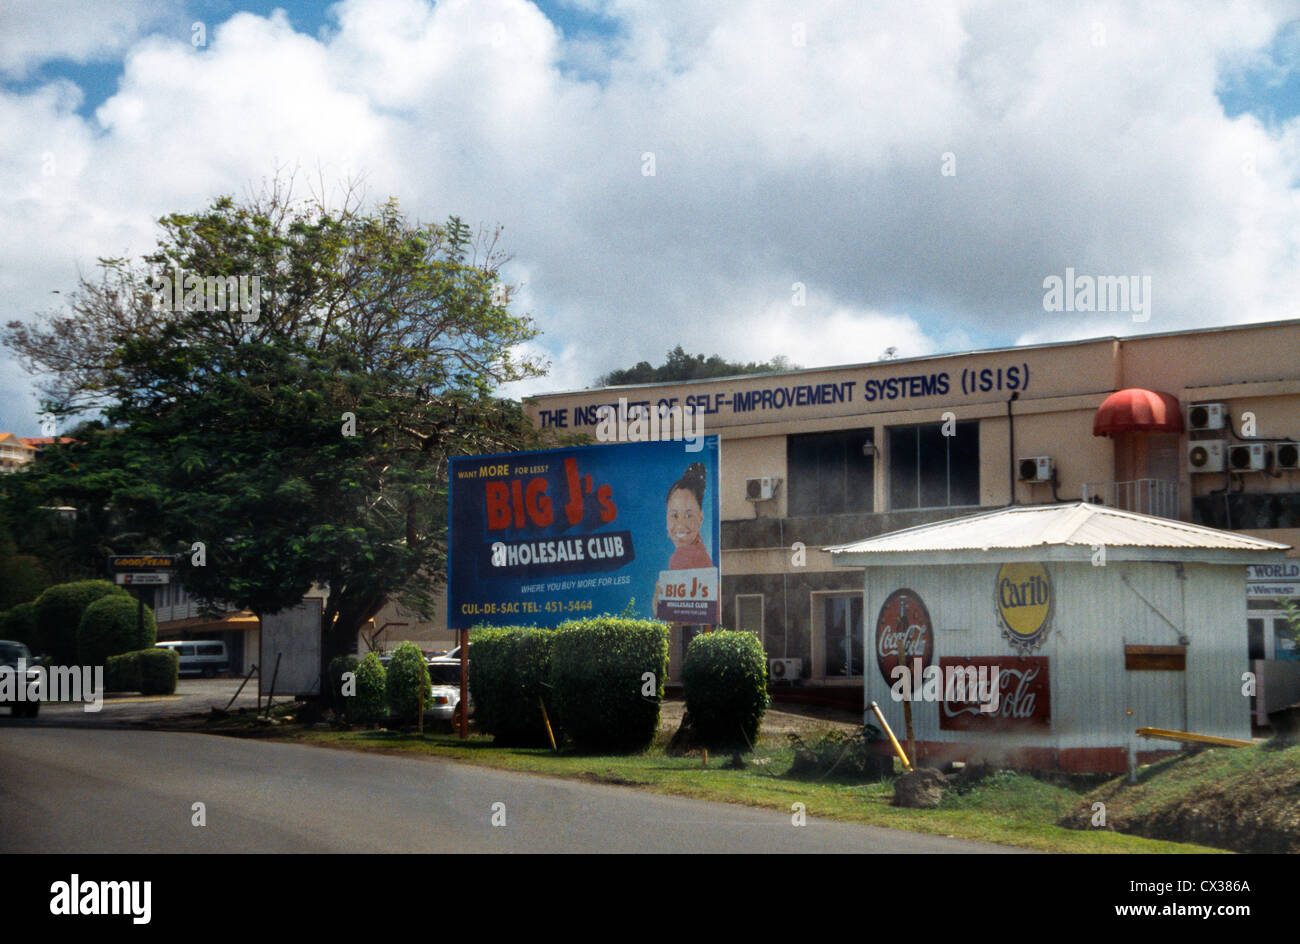 Castries, St. Lucia Billboard Werbung Big J Wholesale Club Stockfoto